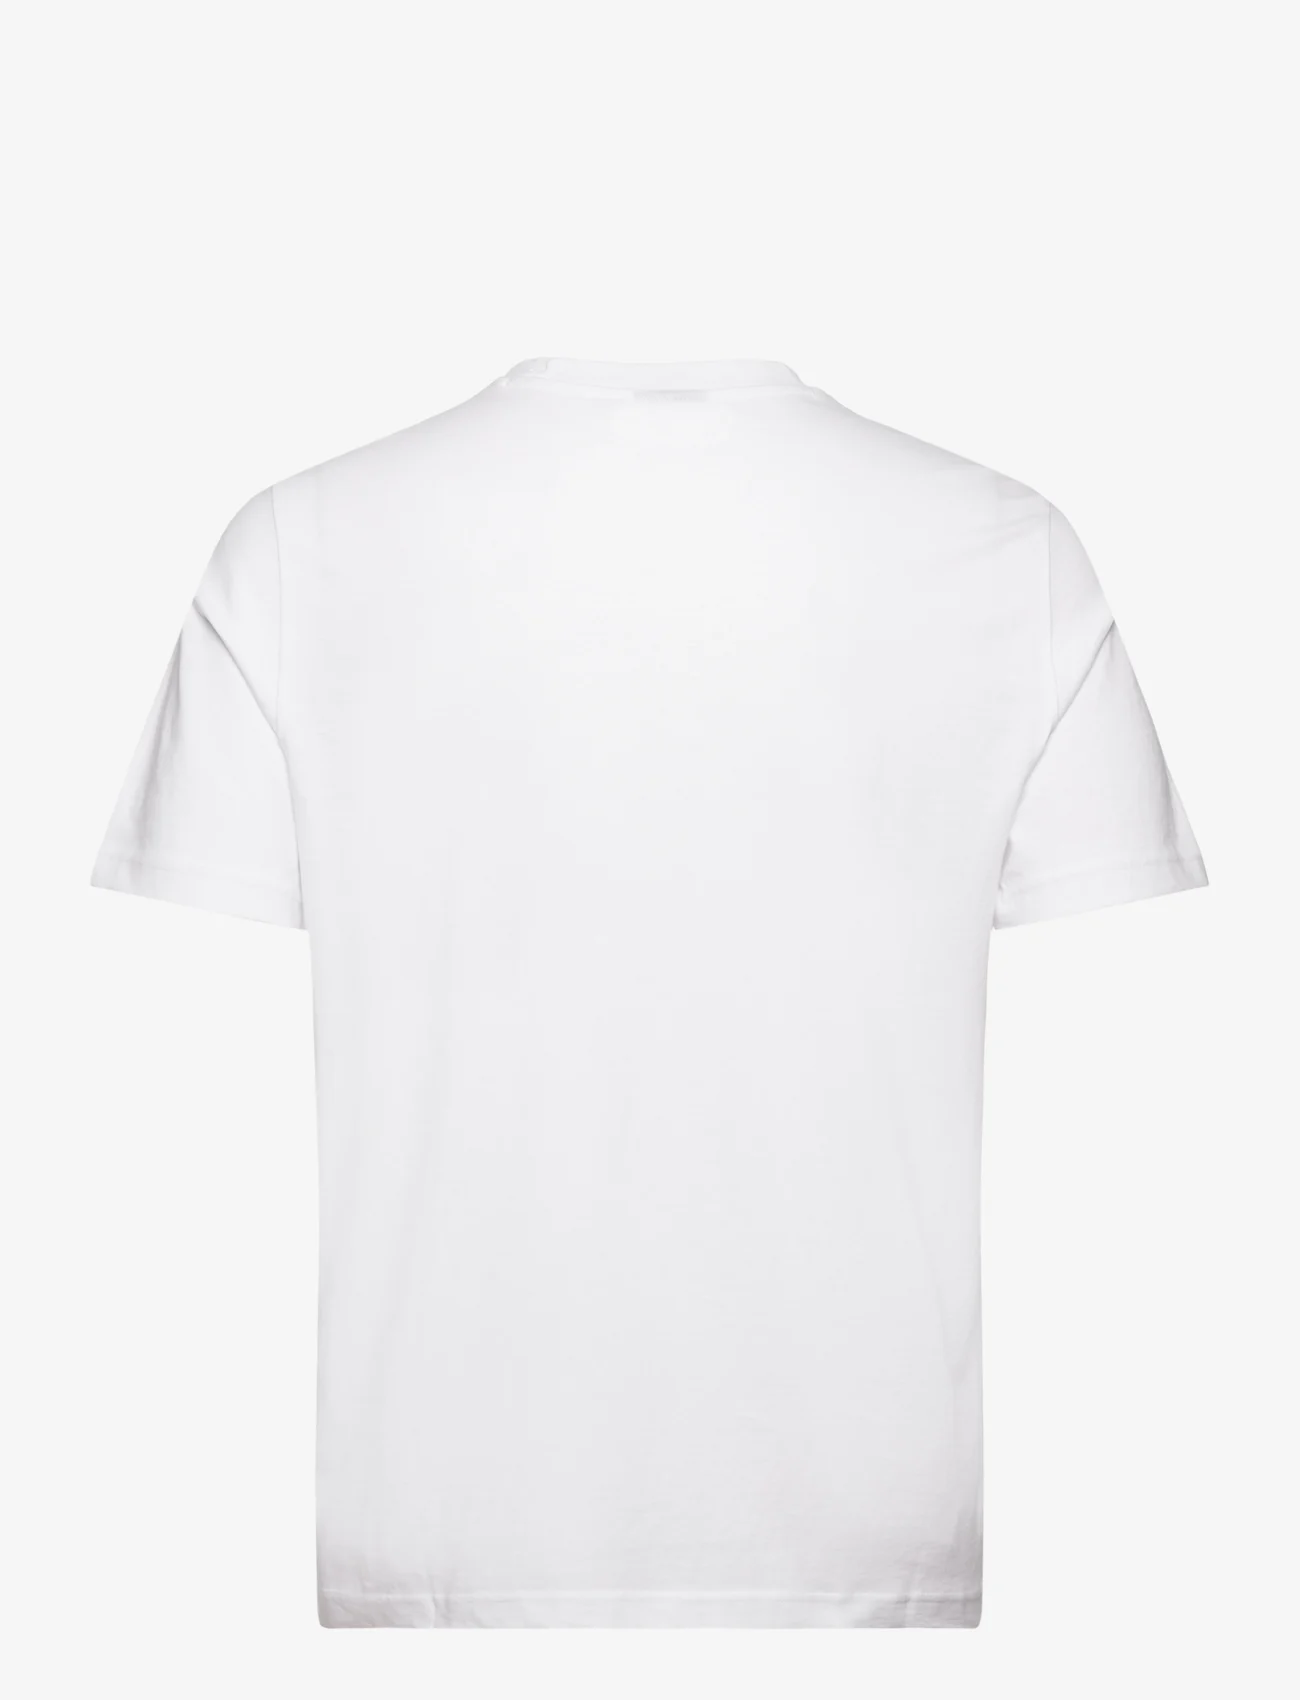 Champion - Crewneck T-Shirt - white - 1